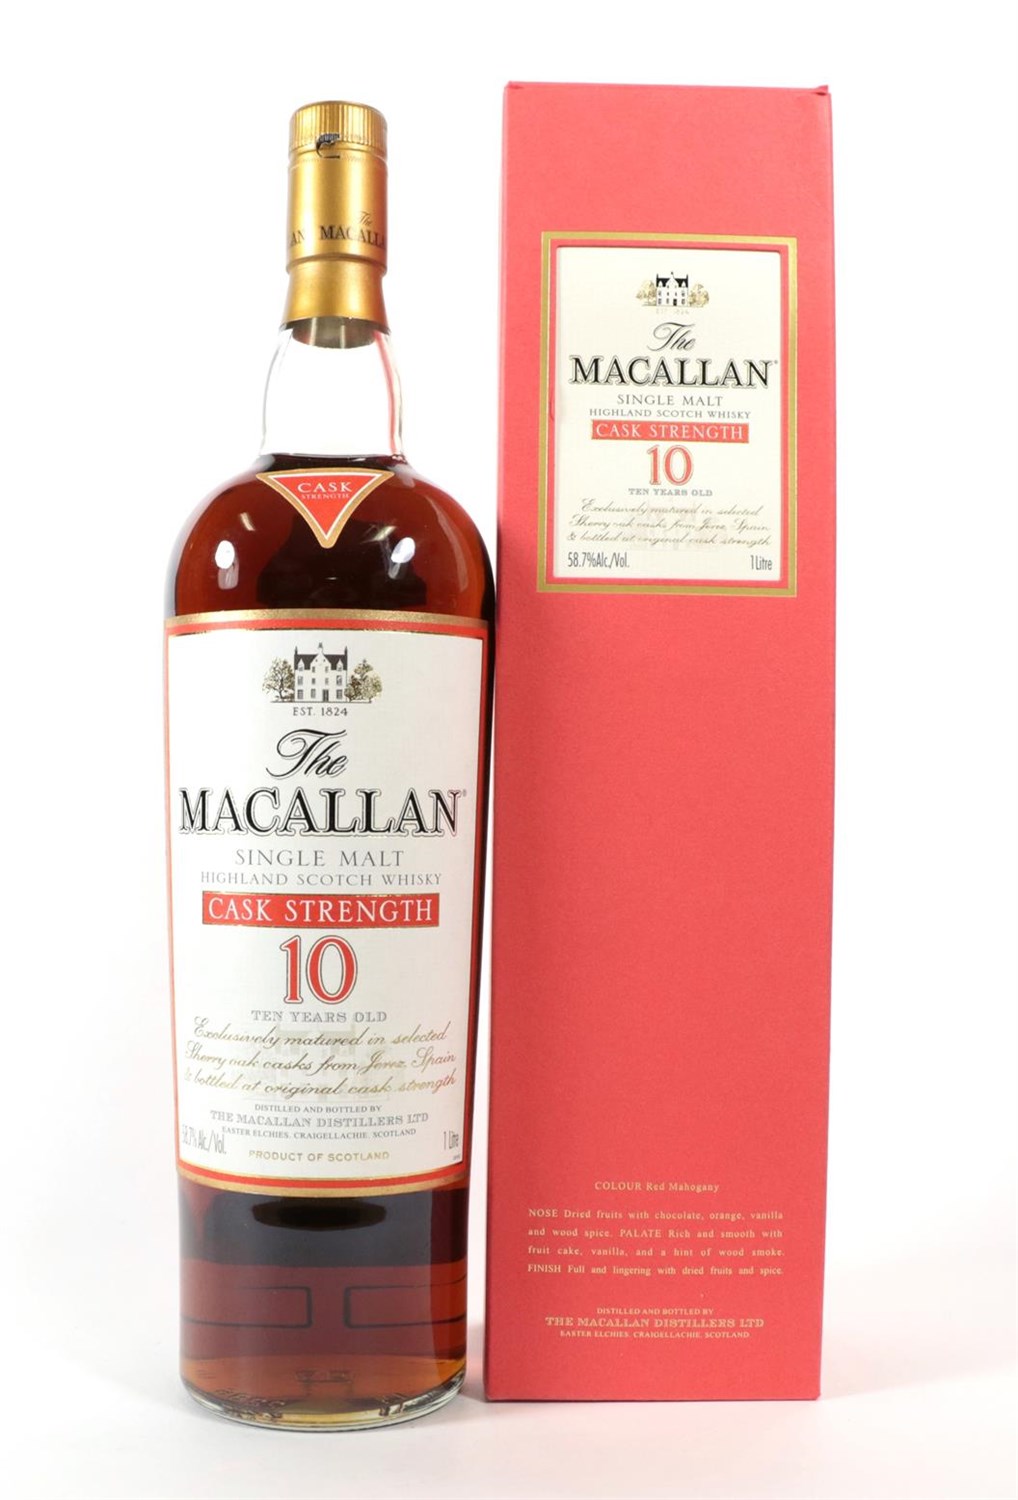 Lot 5093 - The Macallan Single Malt Highland Scotch Whisky 10 Years Old Cask Strength, 58.7% vol 1 Litre,...